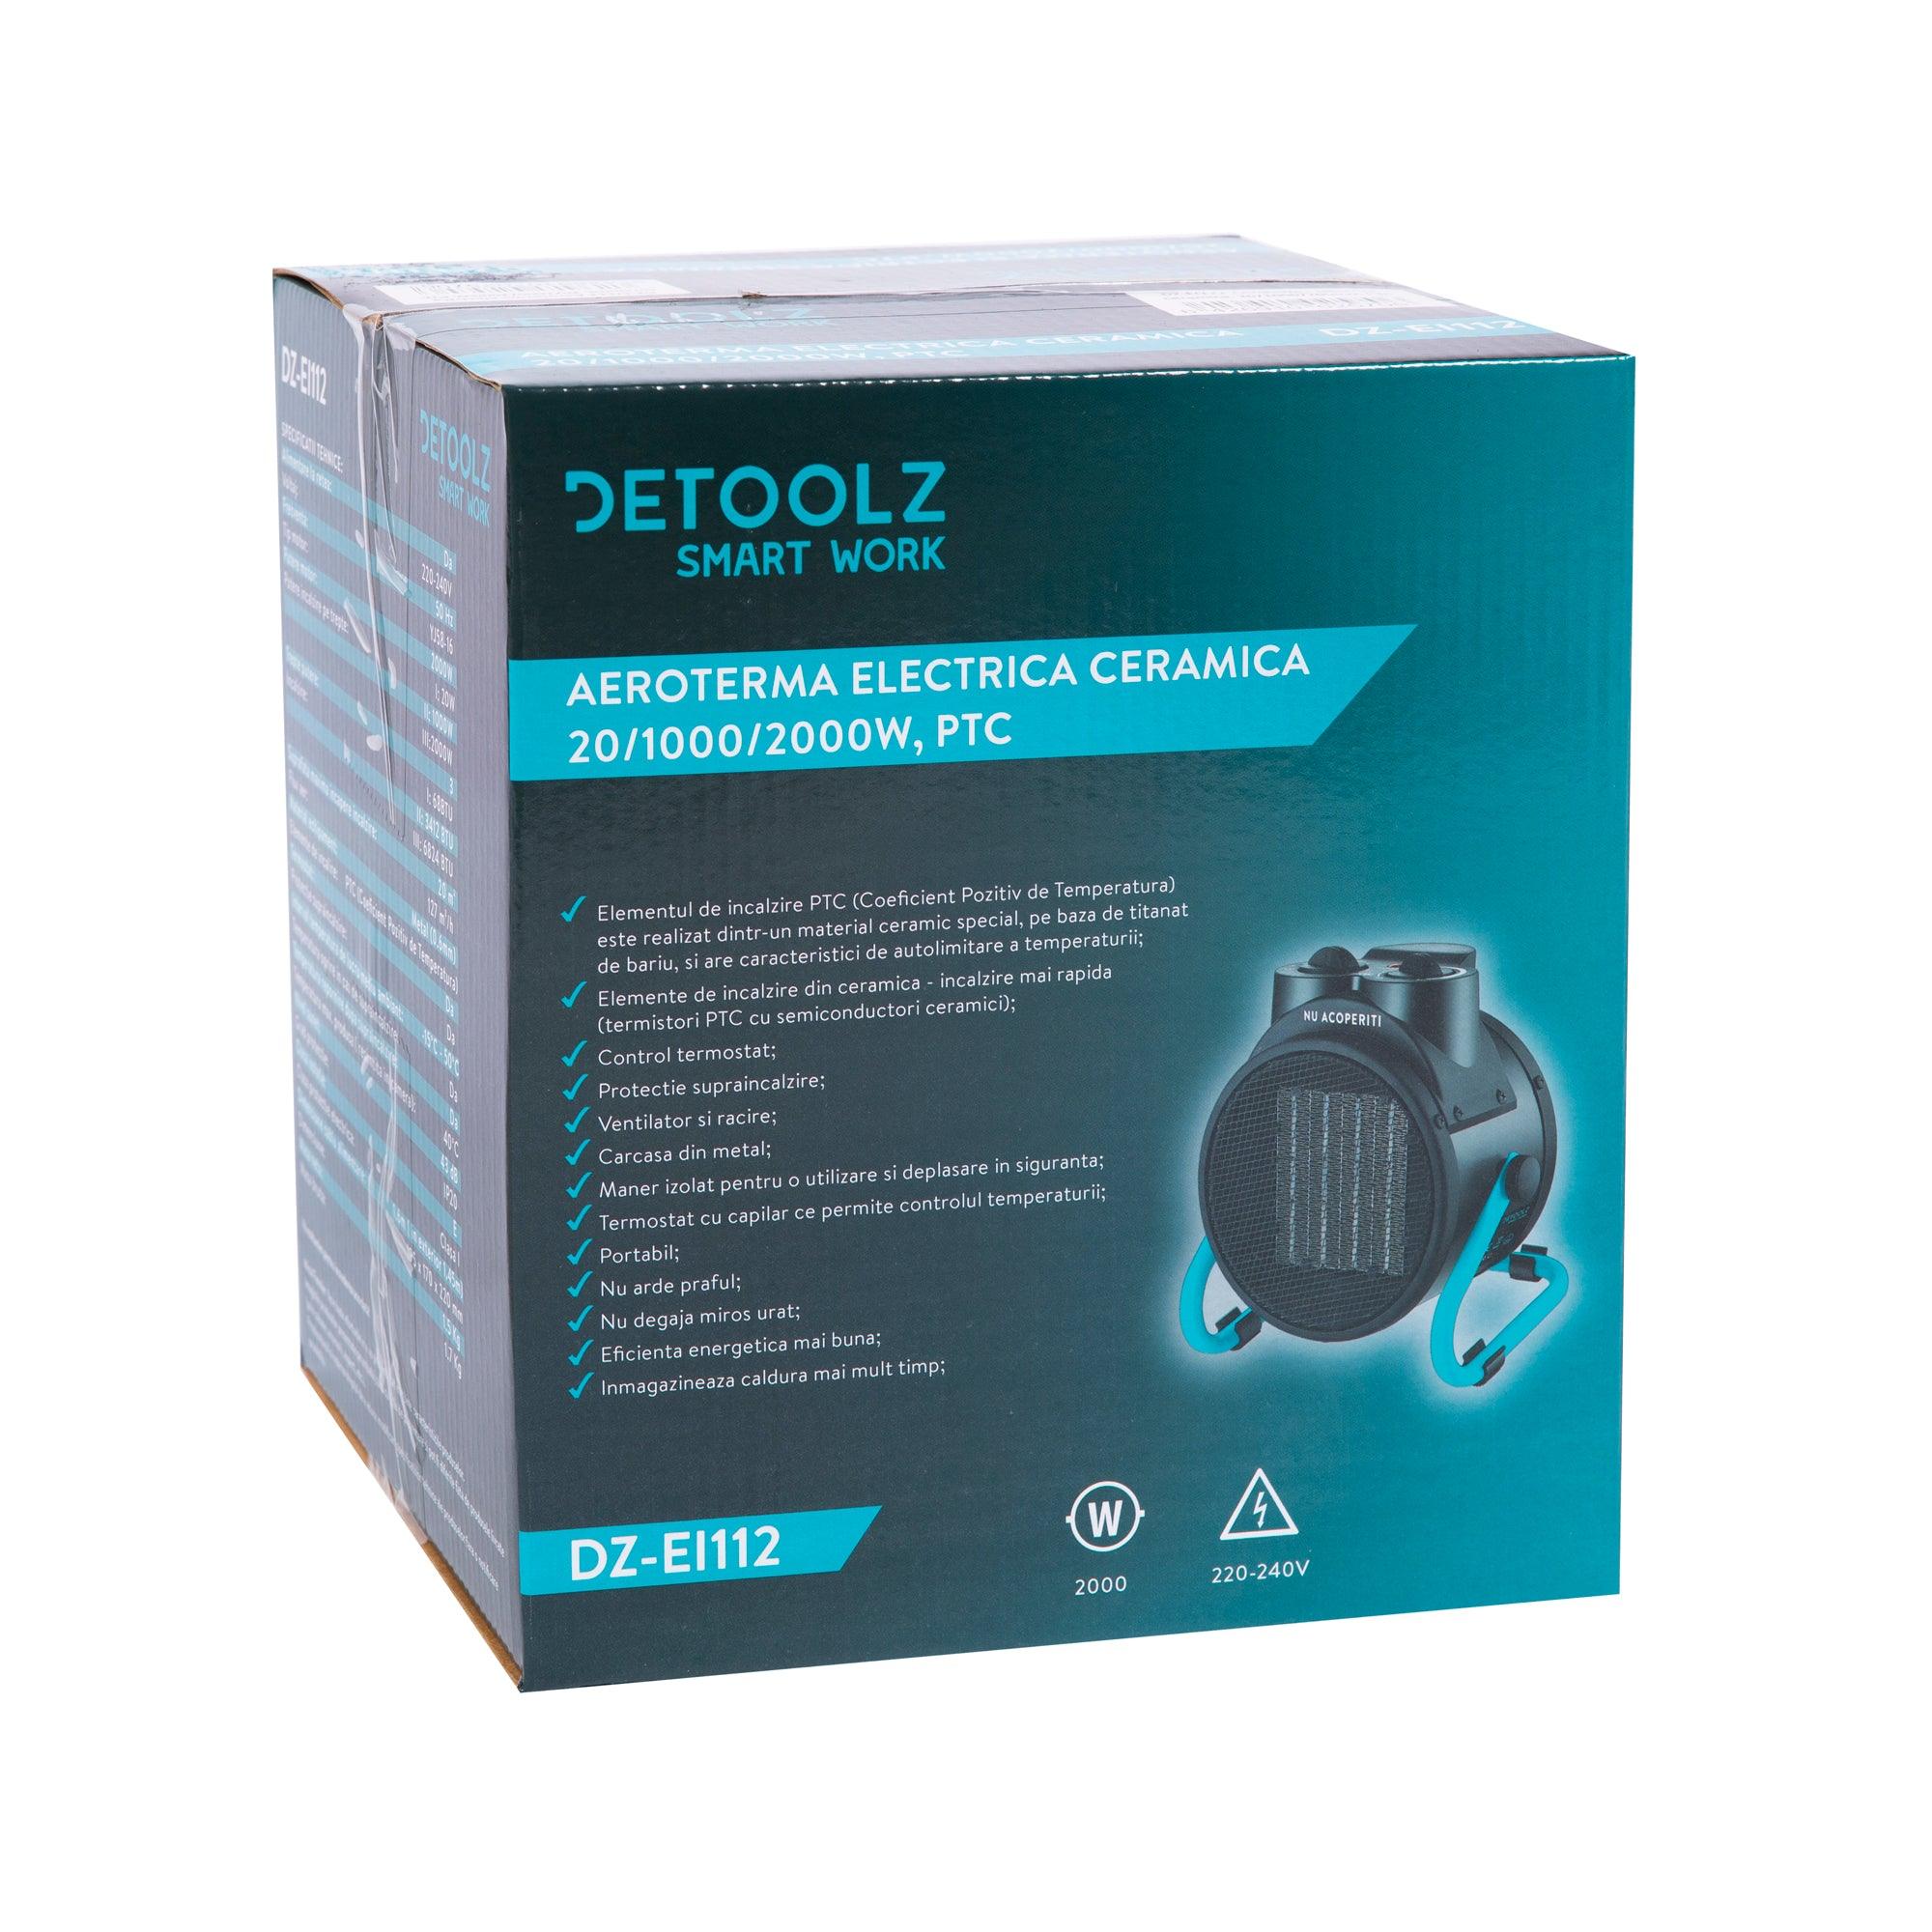 Aeroterma electrica ceramica Detoolz DZ-EI112, 20/1000/2000W PTC - ZEP.RO